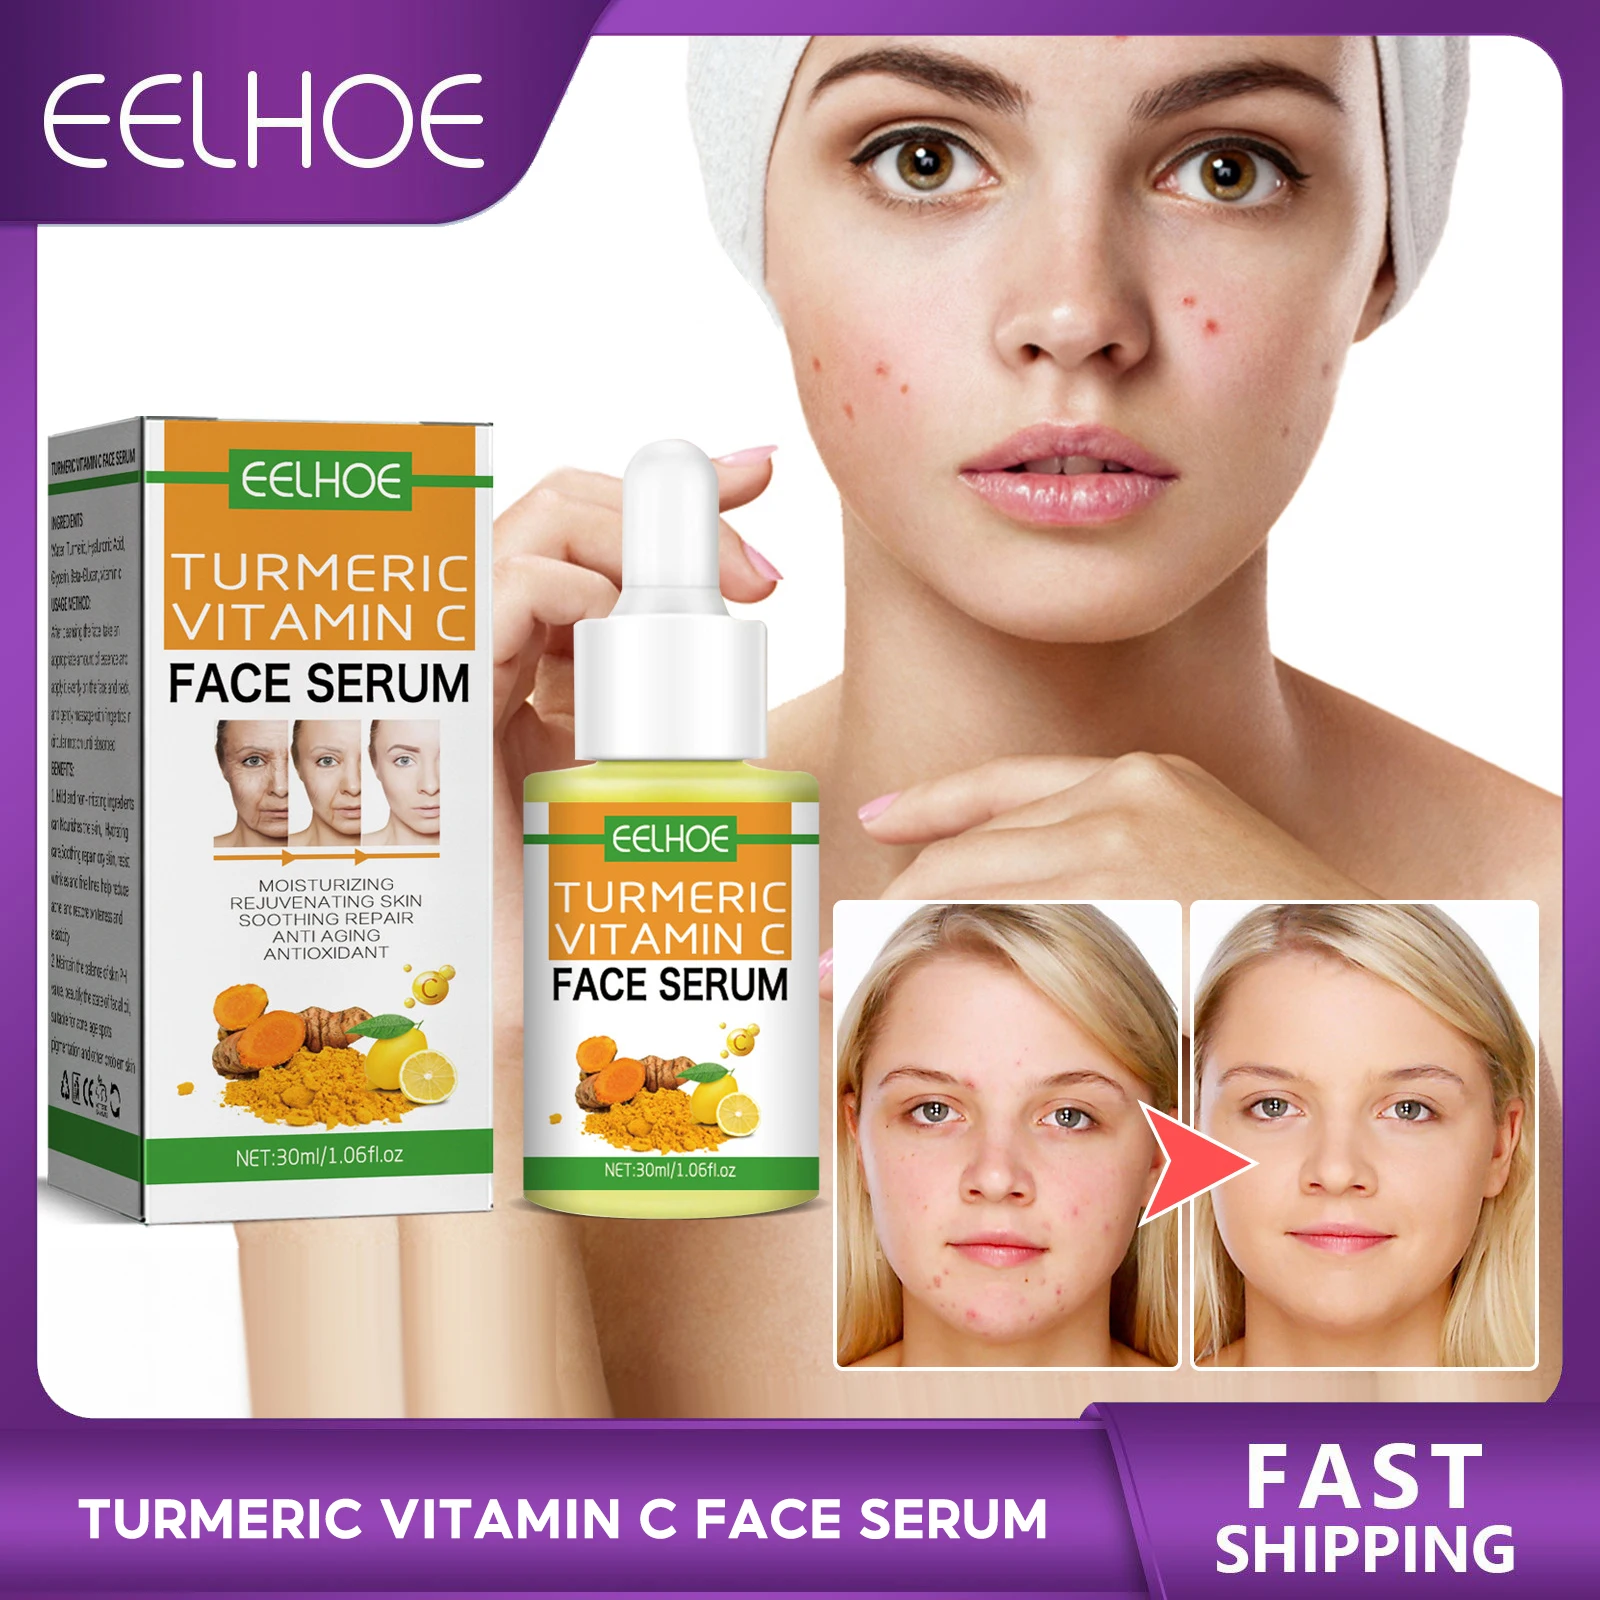 

Turmeric Vitamin C Facial Essence Smooth Fine Lines Reduce Wrinkles Fade Acne Lighten Spots Brightening Moisturizing Facial Care